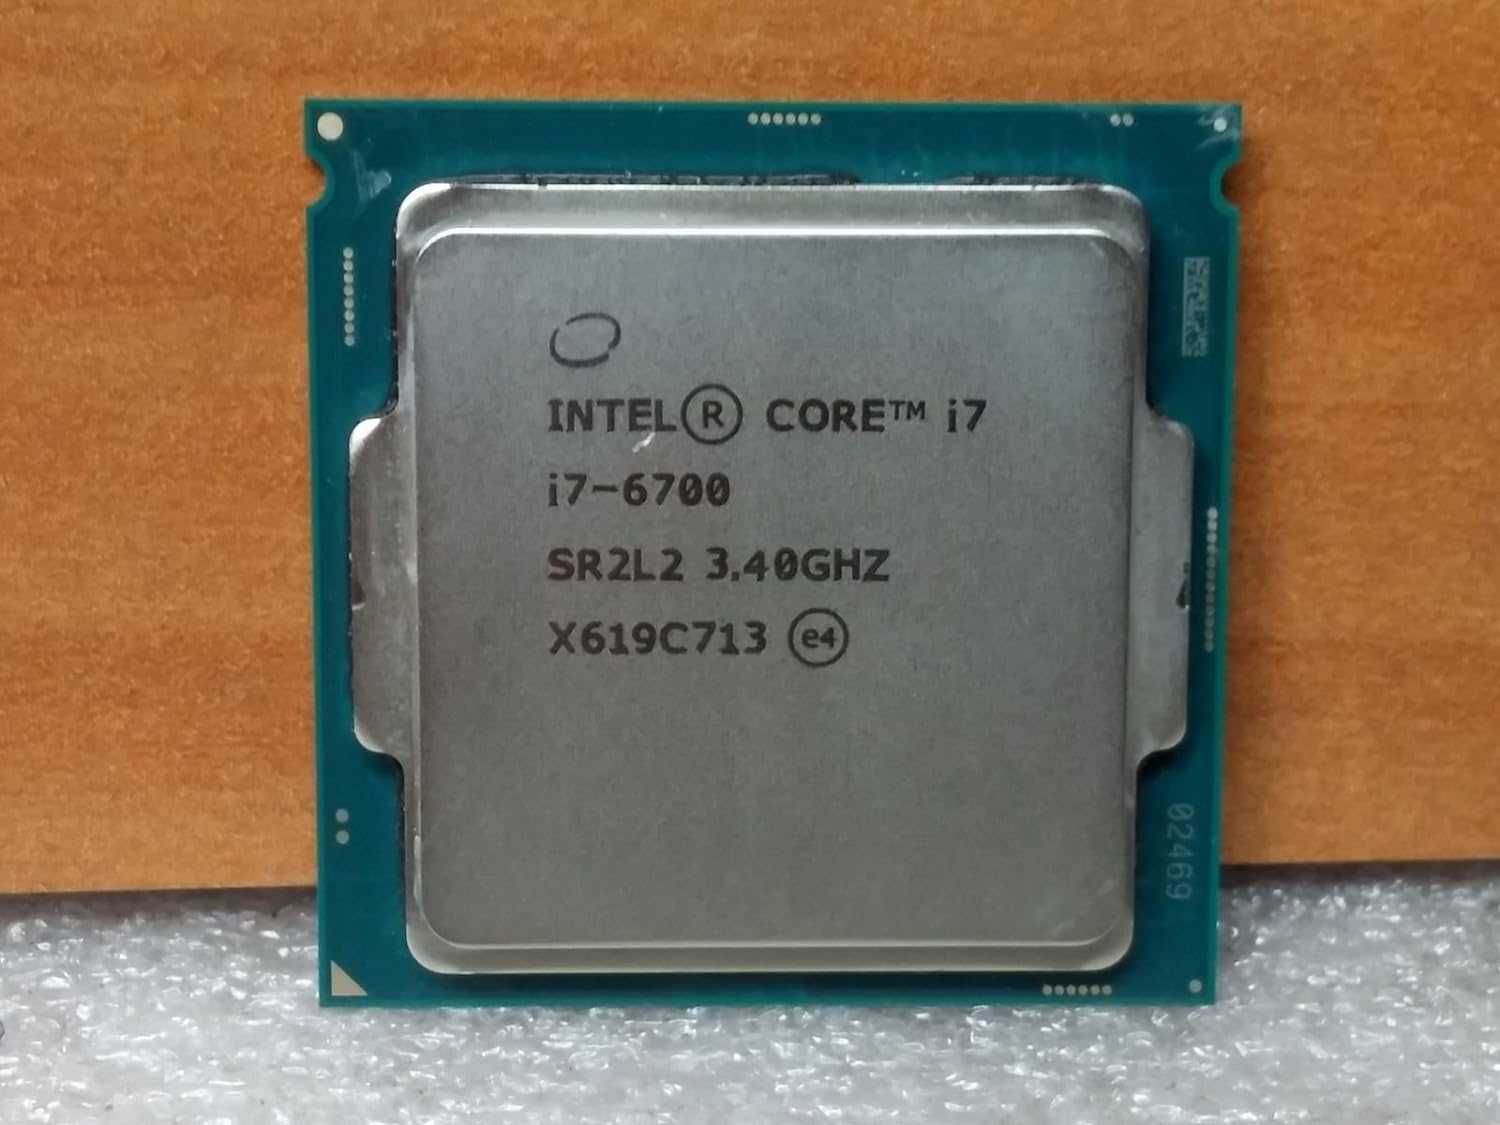 procesor i7 6700, 6700k + pasta termica